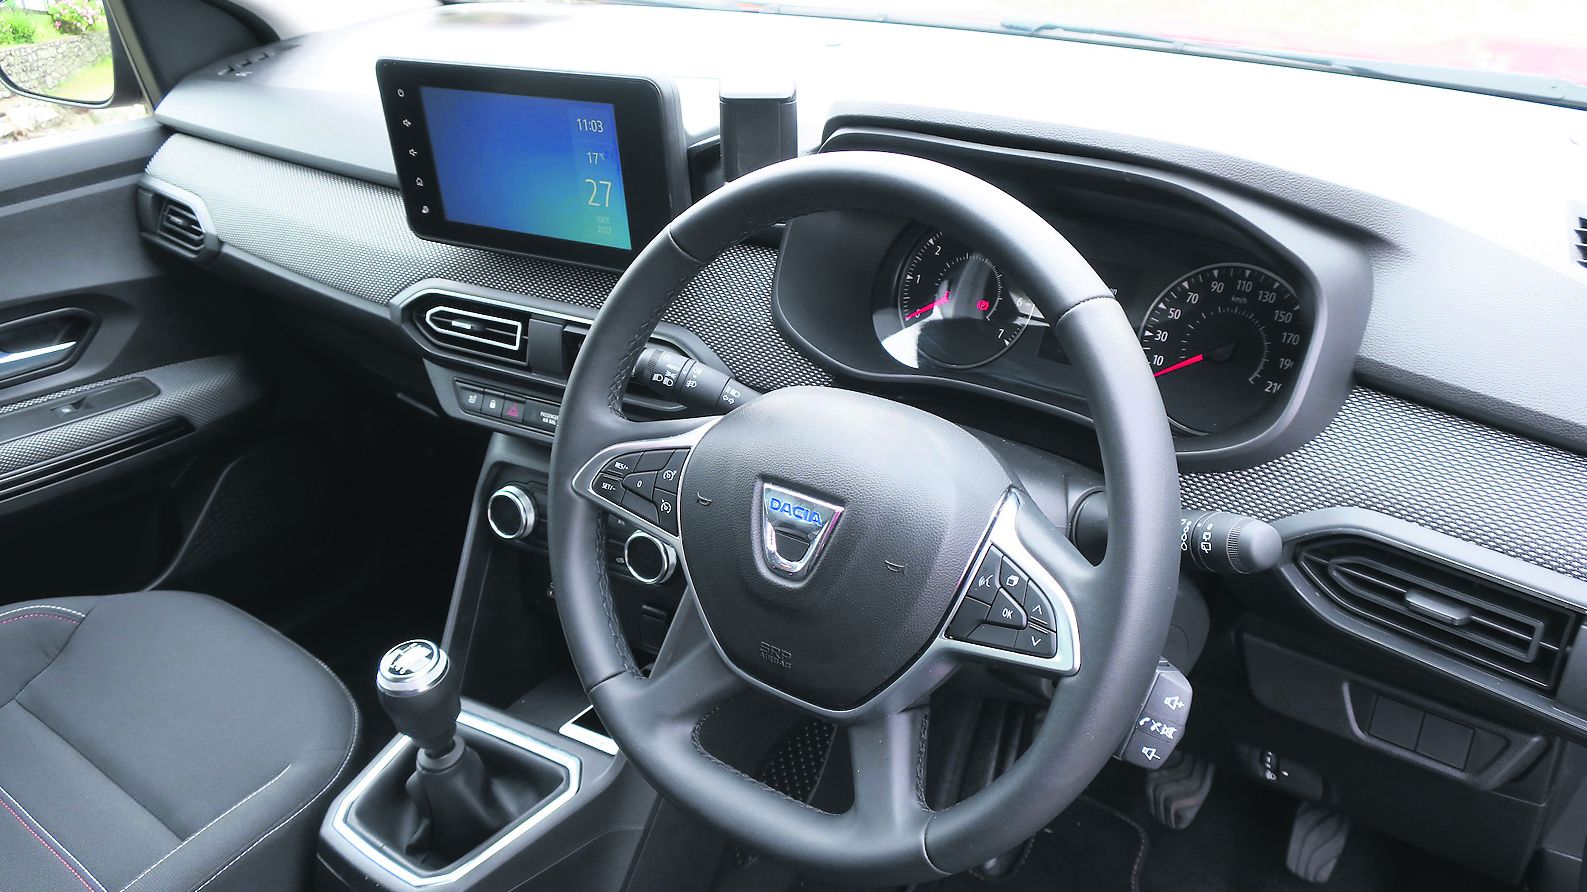 Next-Gen Dacia Sandero Stepway Tipped To Go Hybrid, Should Debut